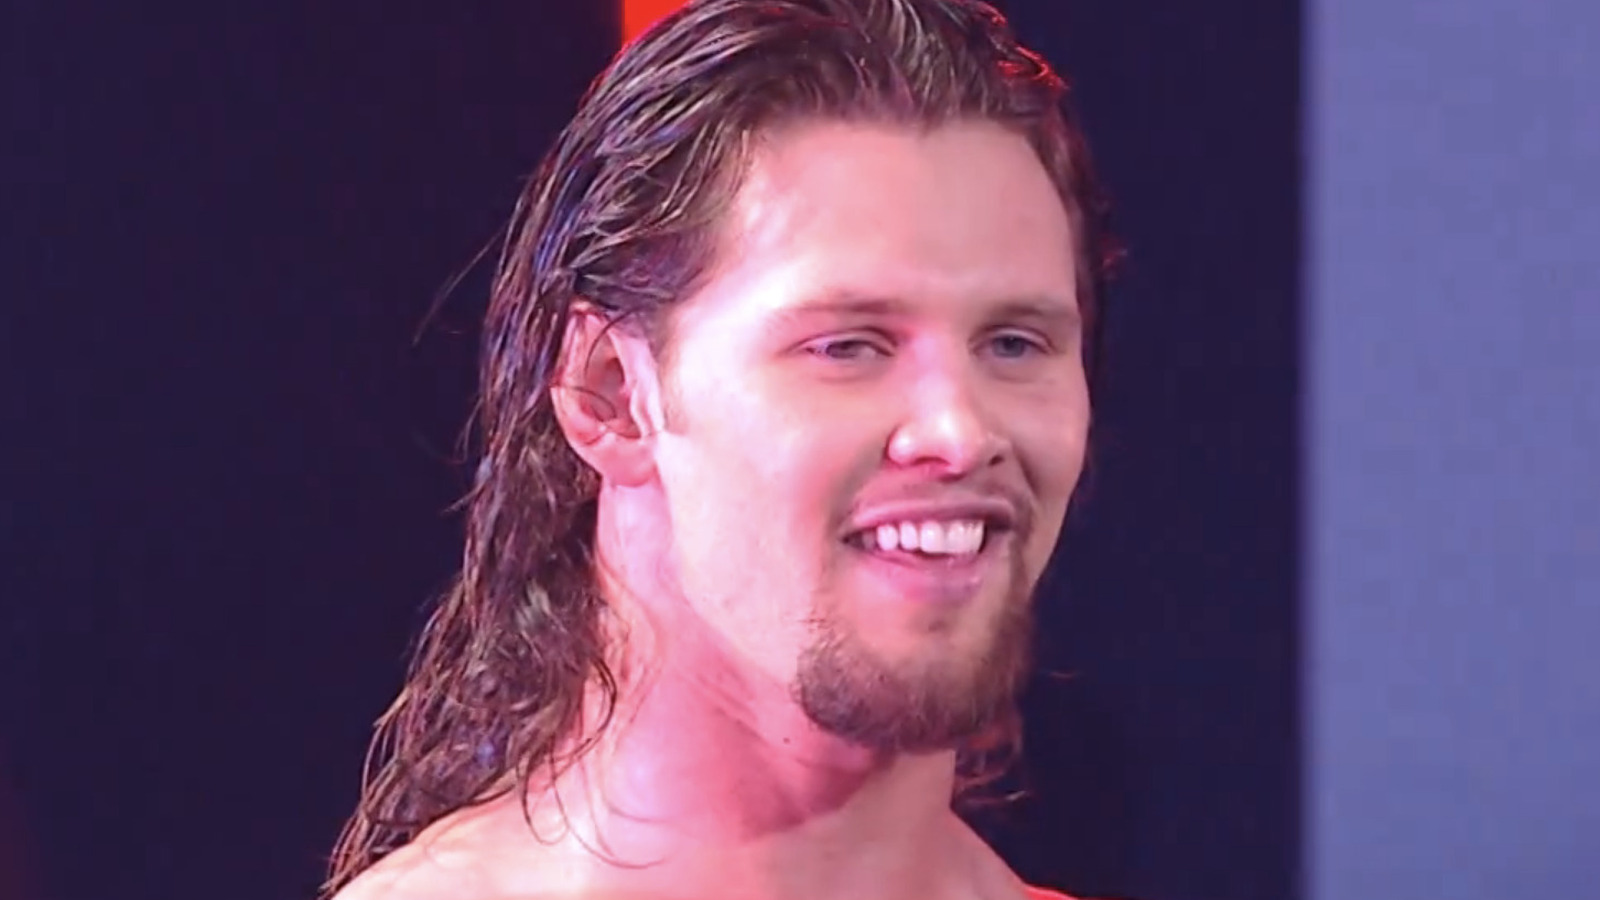 WWE NXT Talent Kale Dixon To Appear On The Bachelorette